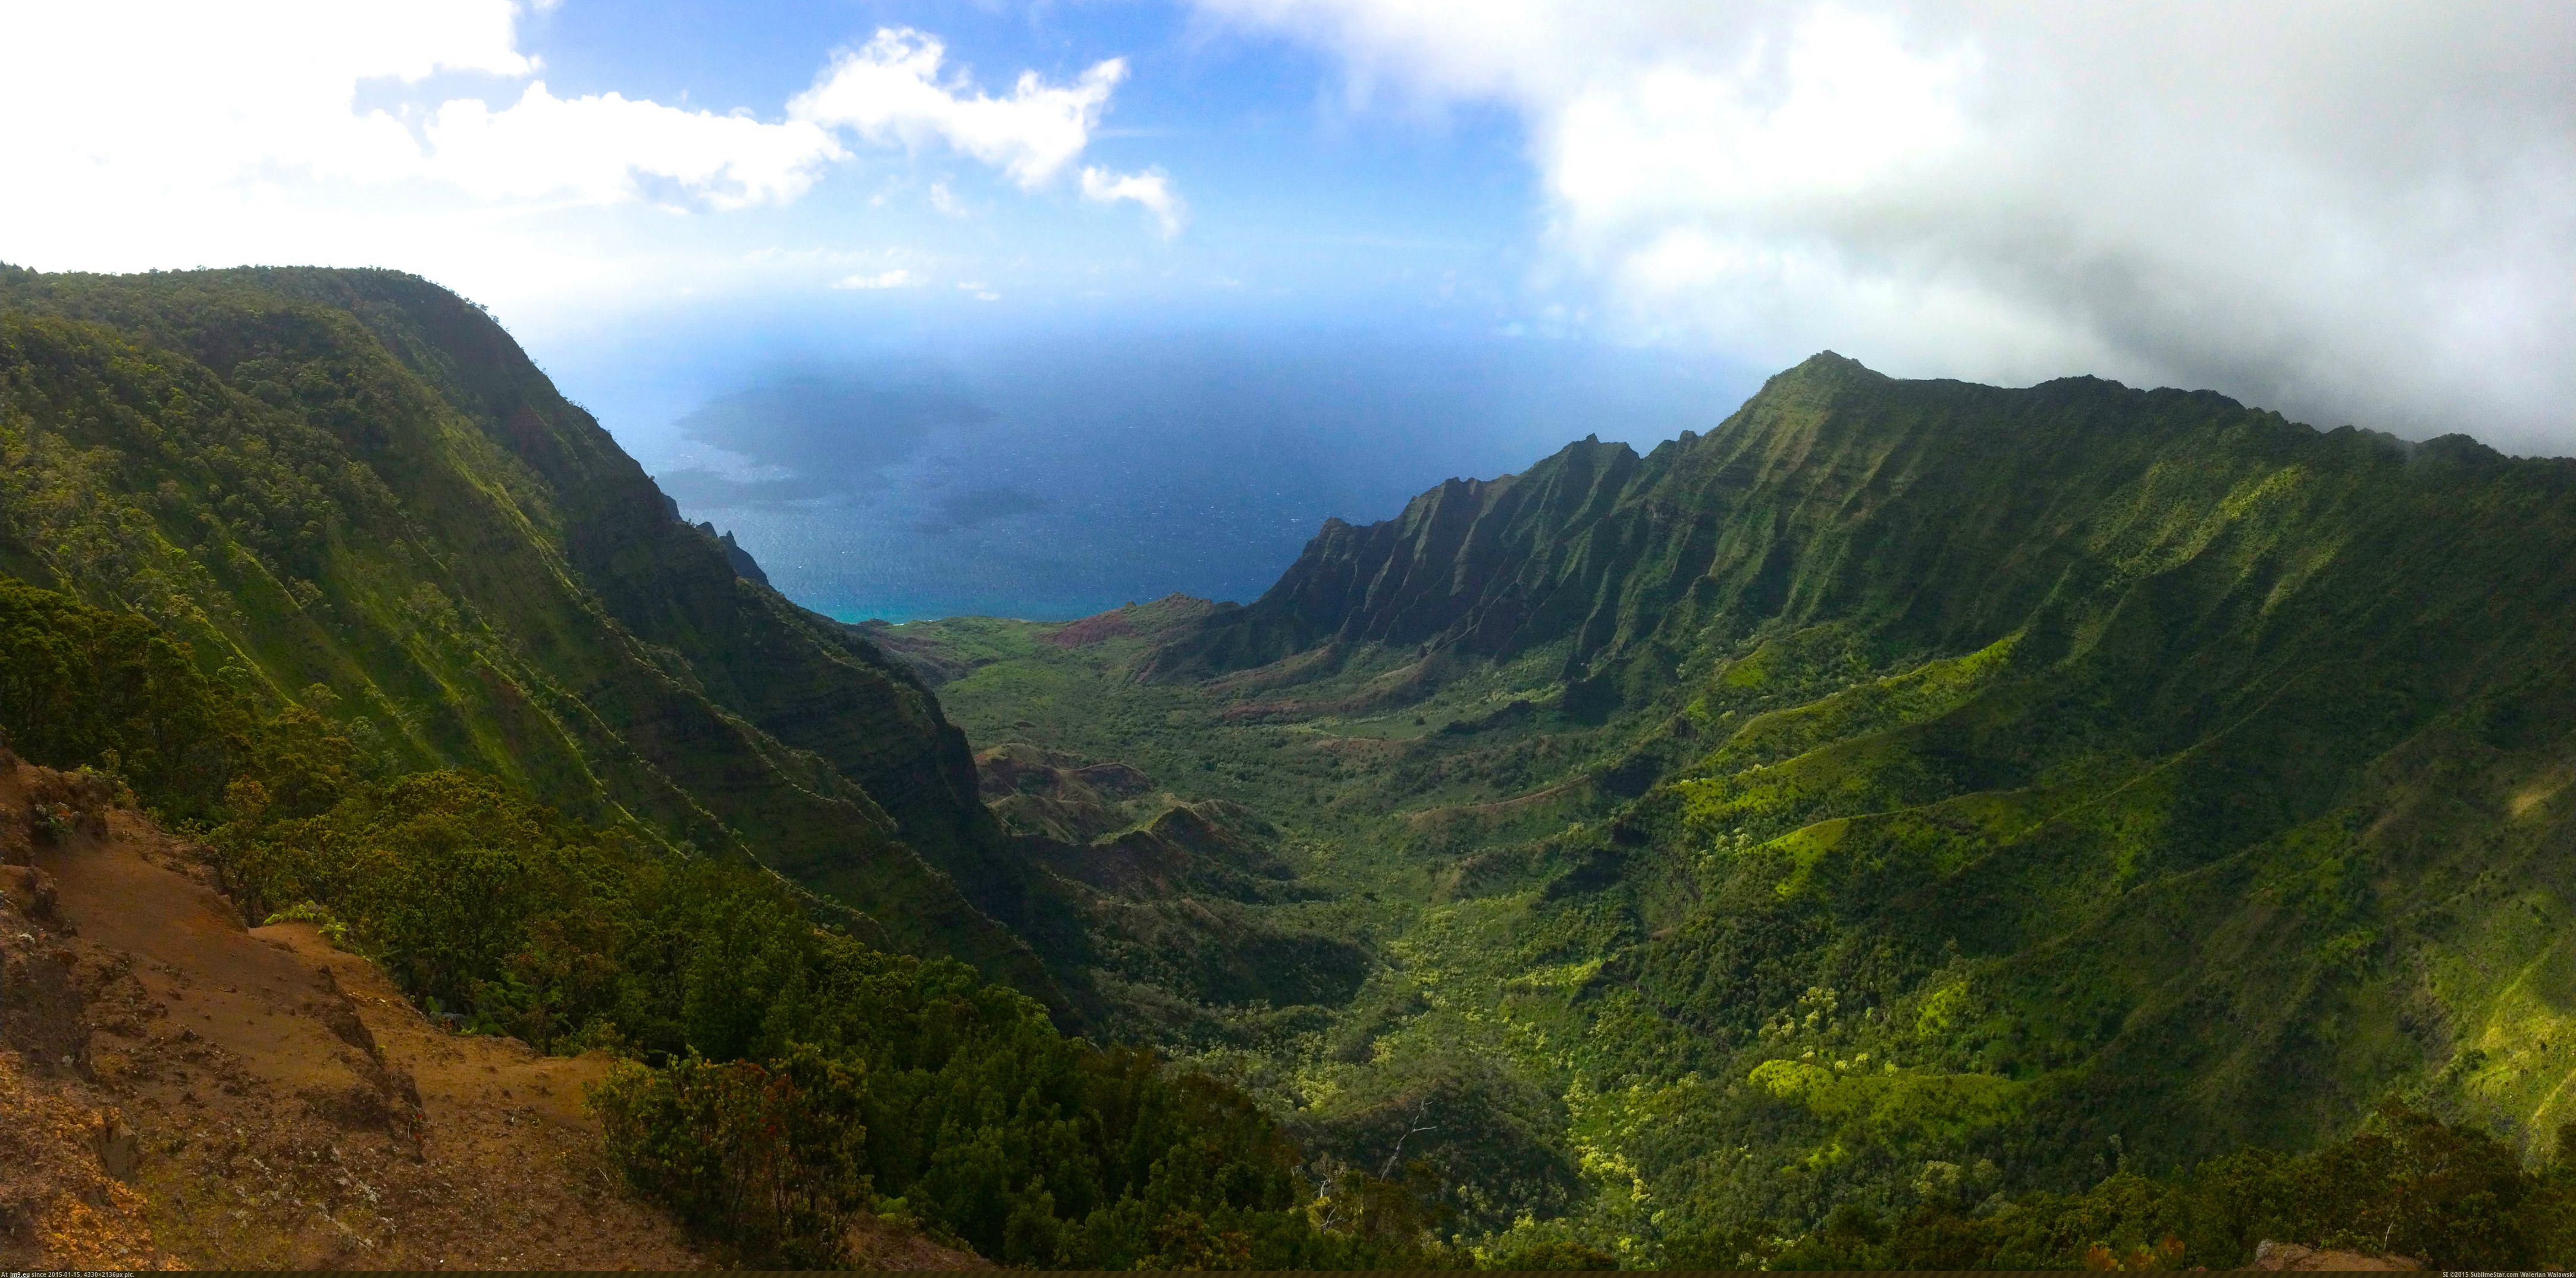 Hawaii Natural Porn - Pic. #Hawaii #Surreal #Lookout #Kauai #Reserve, 1163657B â€“ My r/EARTHPORN  favs